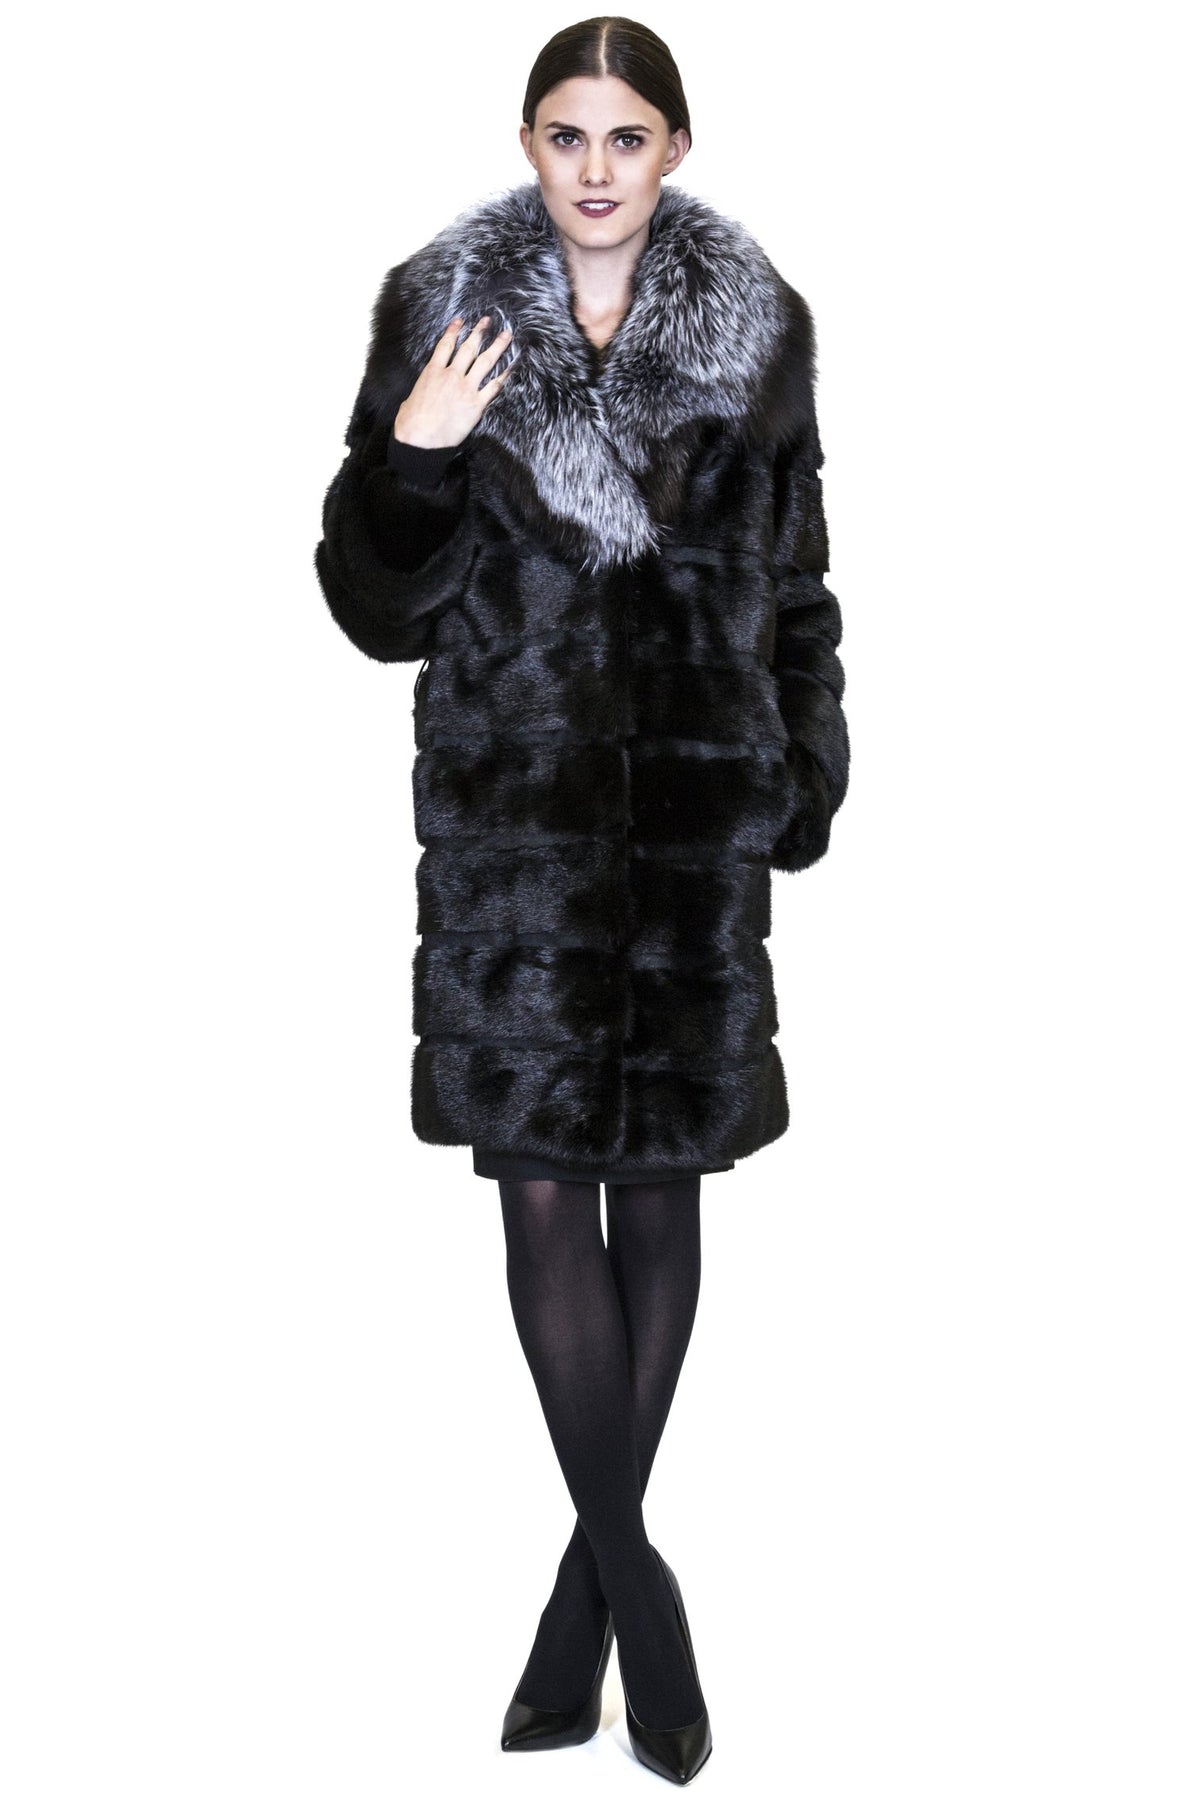 THE BOLTON Full Skin Mink Coat with Plush Silver Fox Collar - paulamariecollection